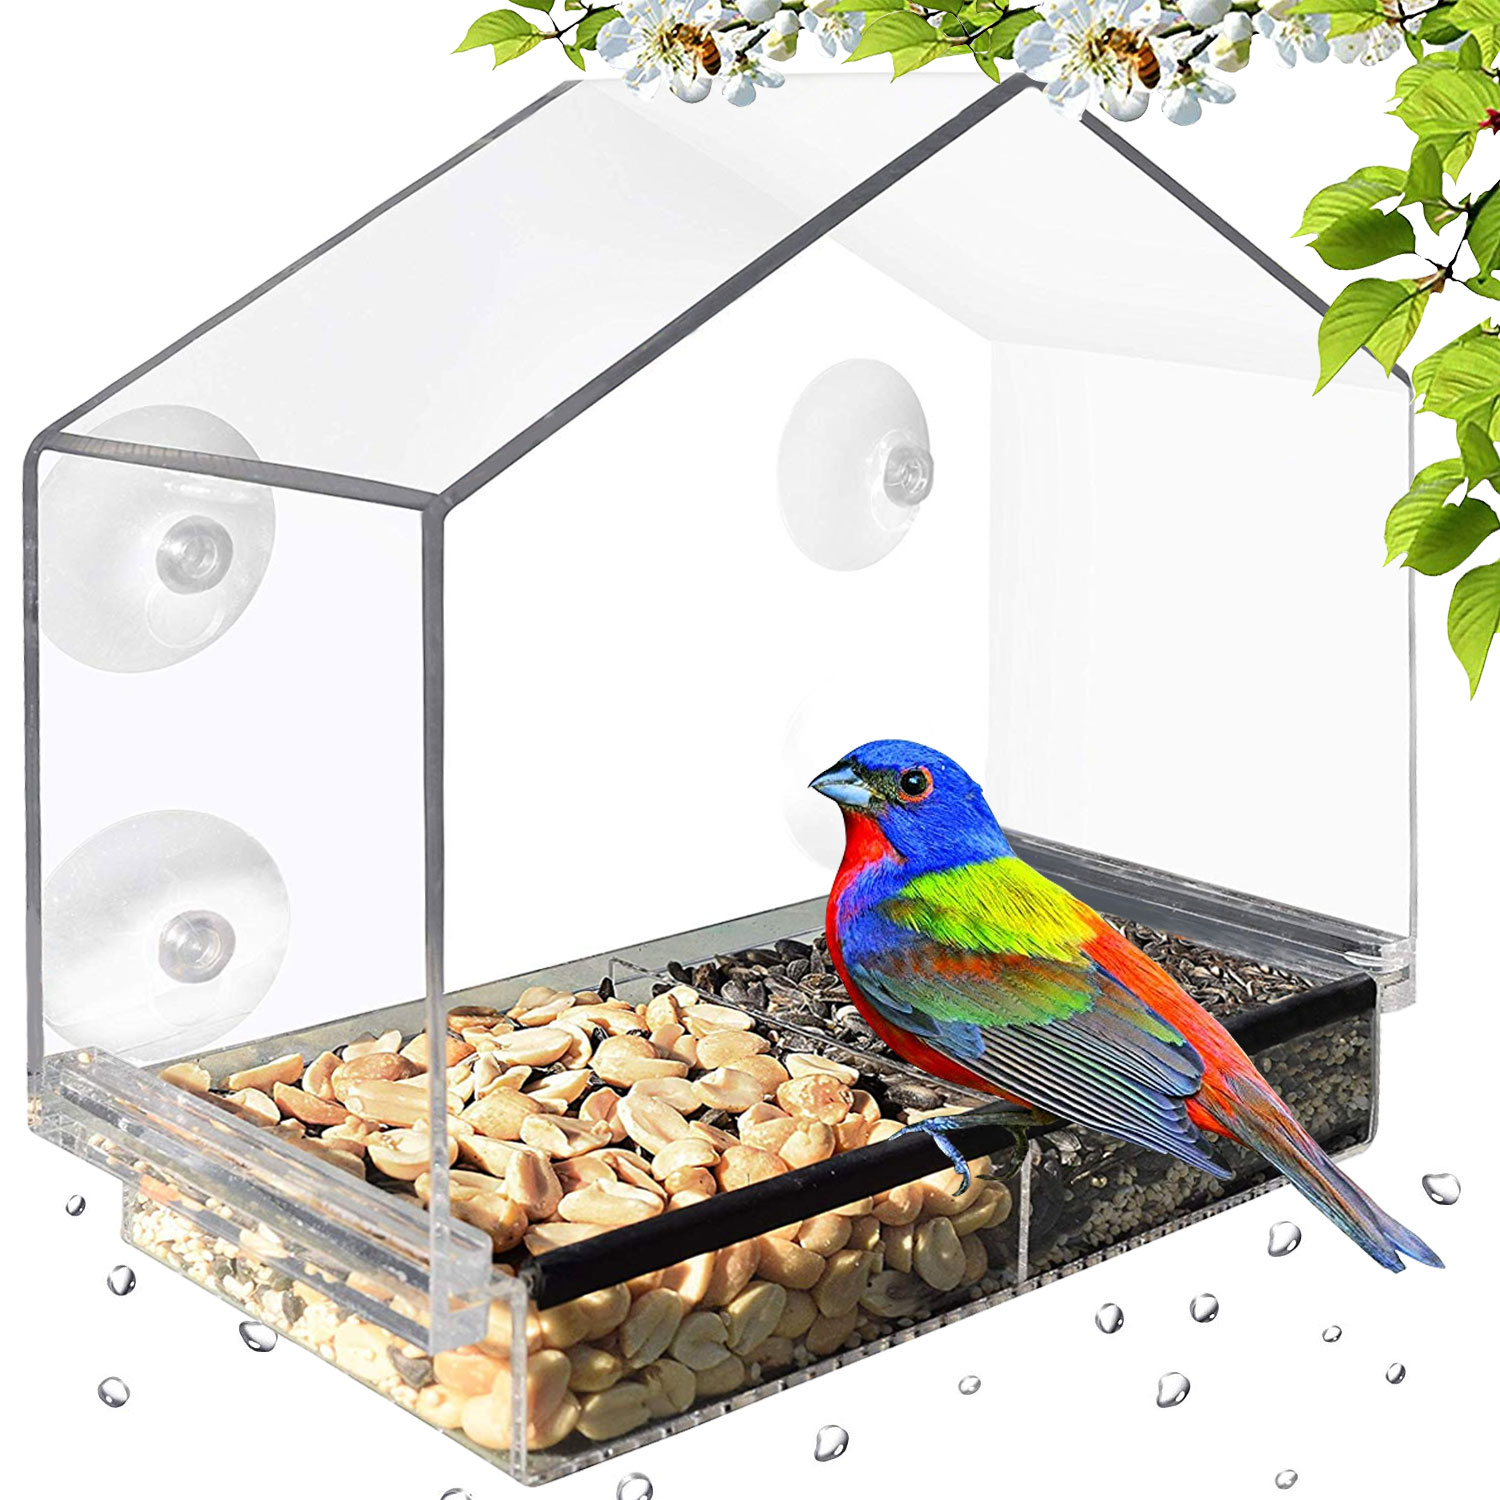 Clear Glass Window Birds Hanging Bird Feeder House Table Suction New Peanut A5D7 